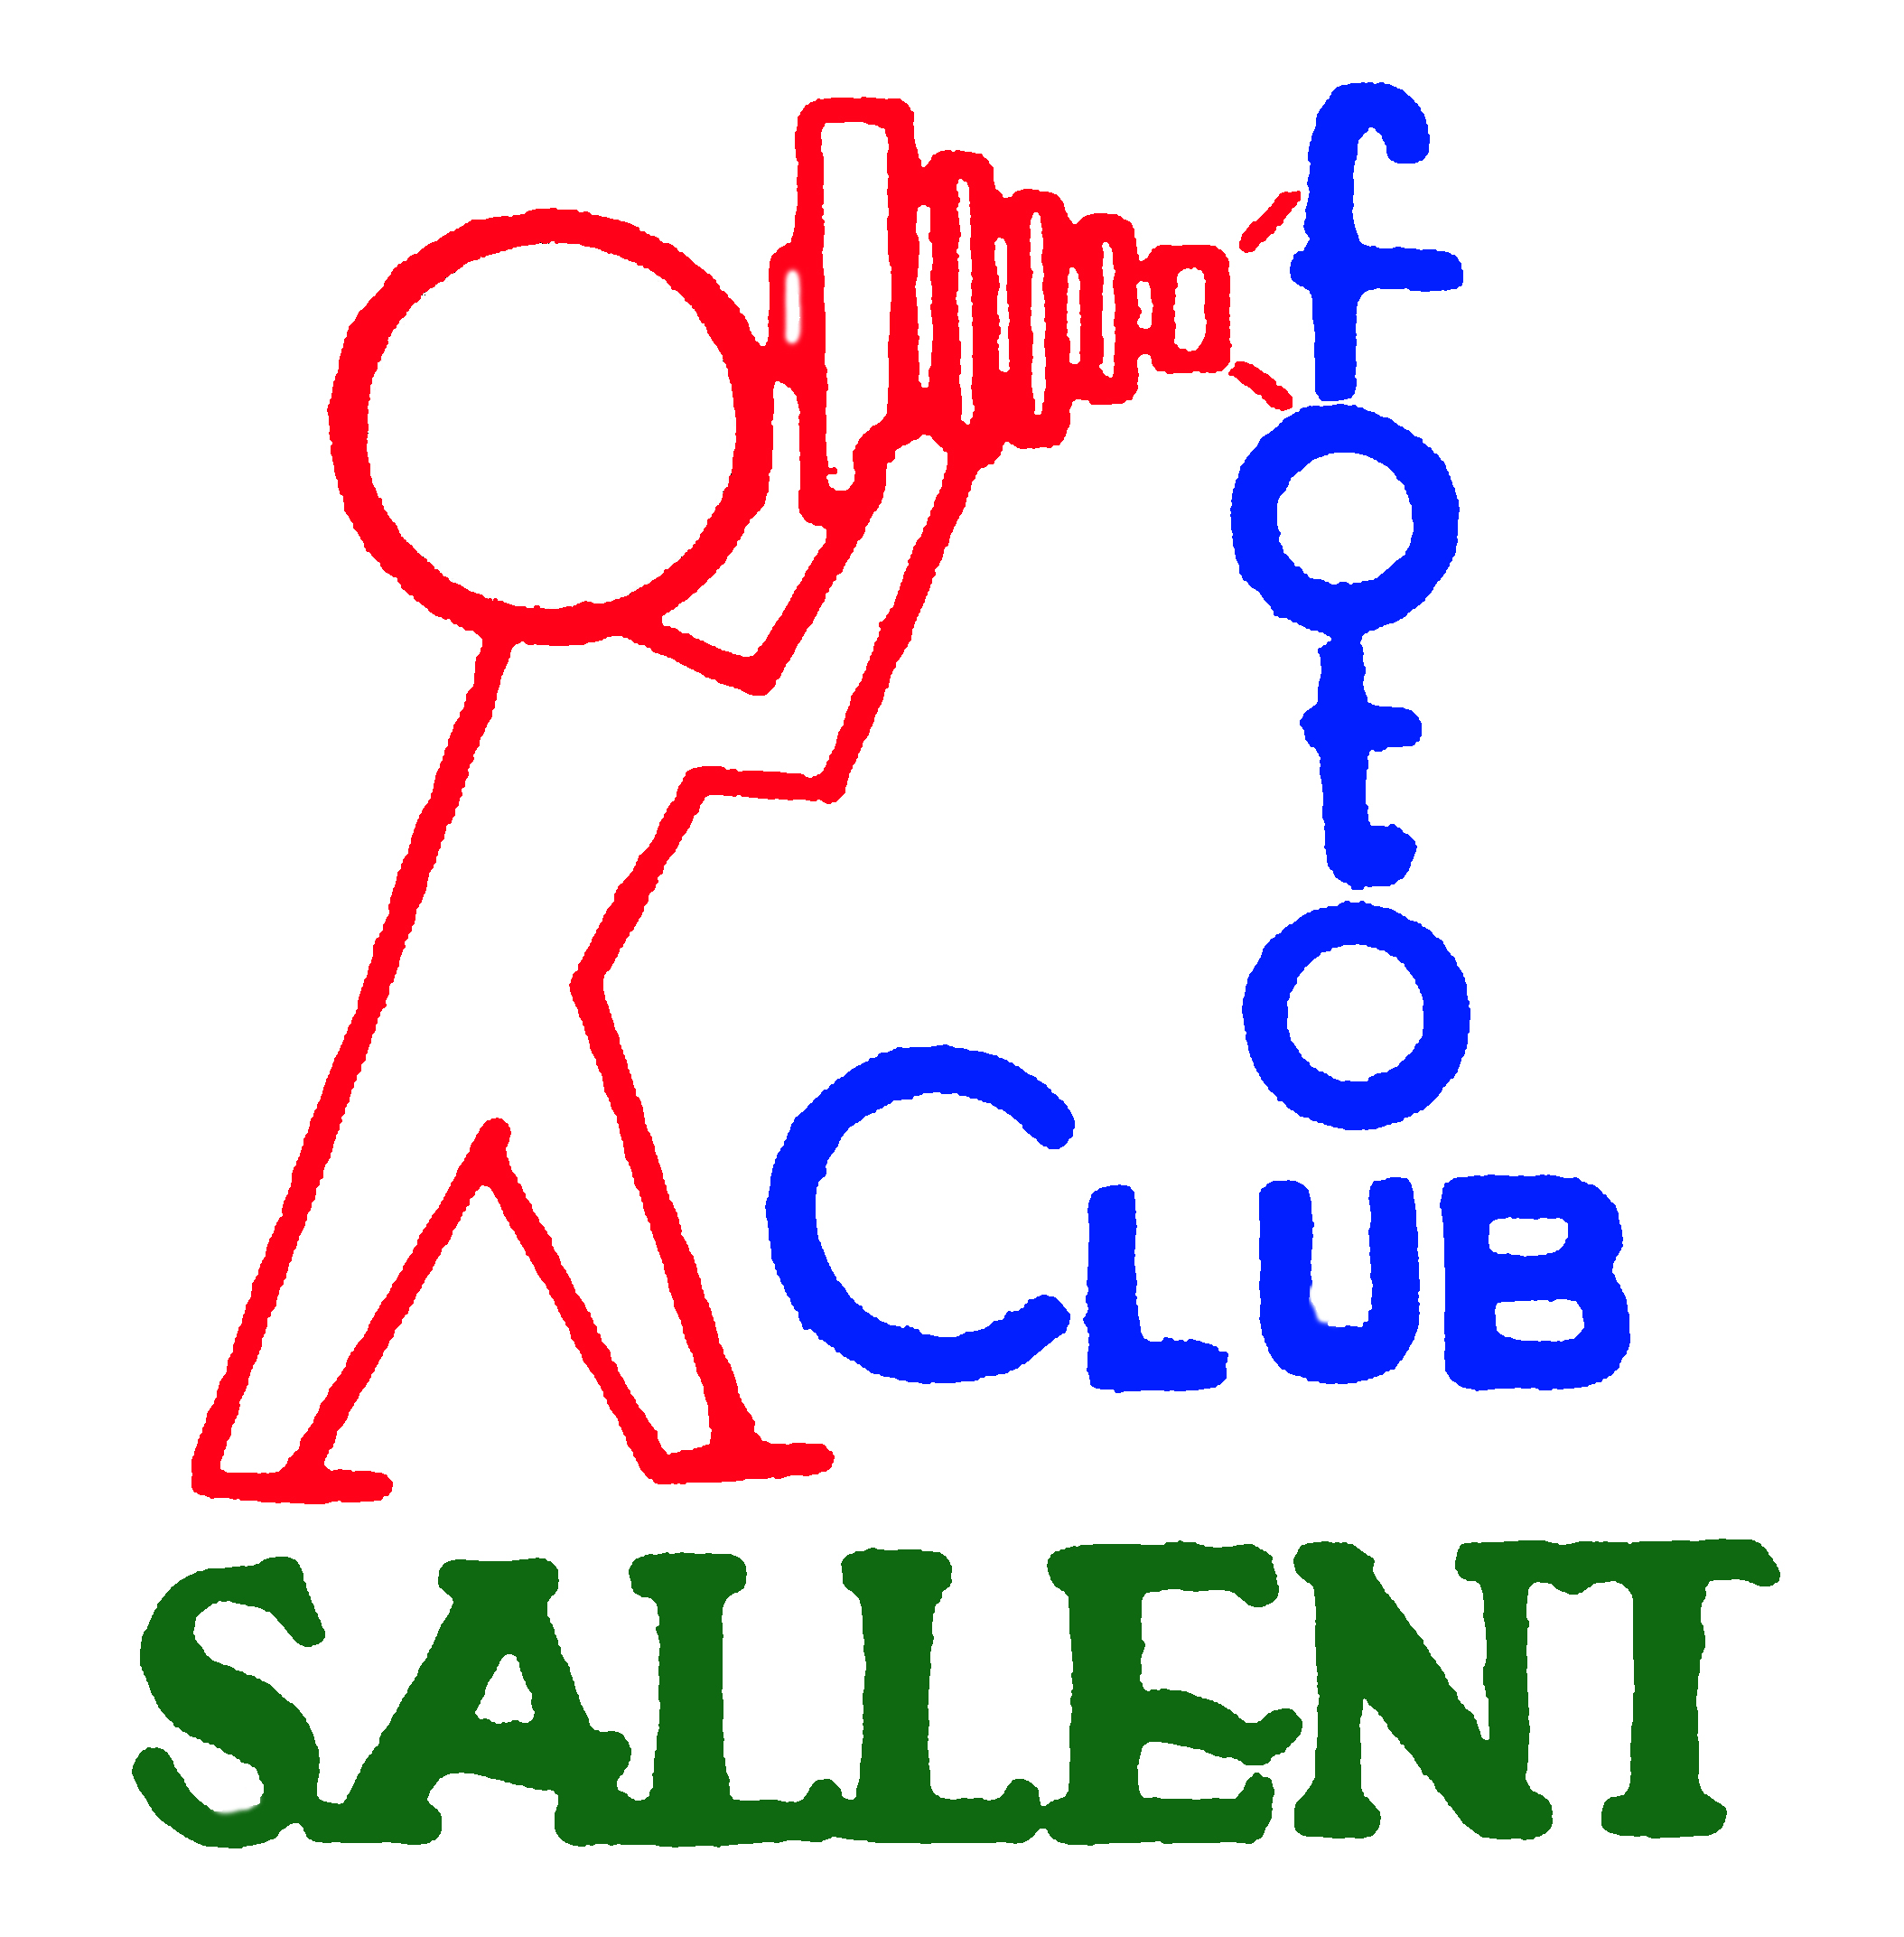 Foto Club Sallent